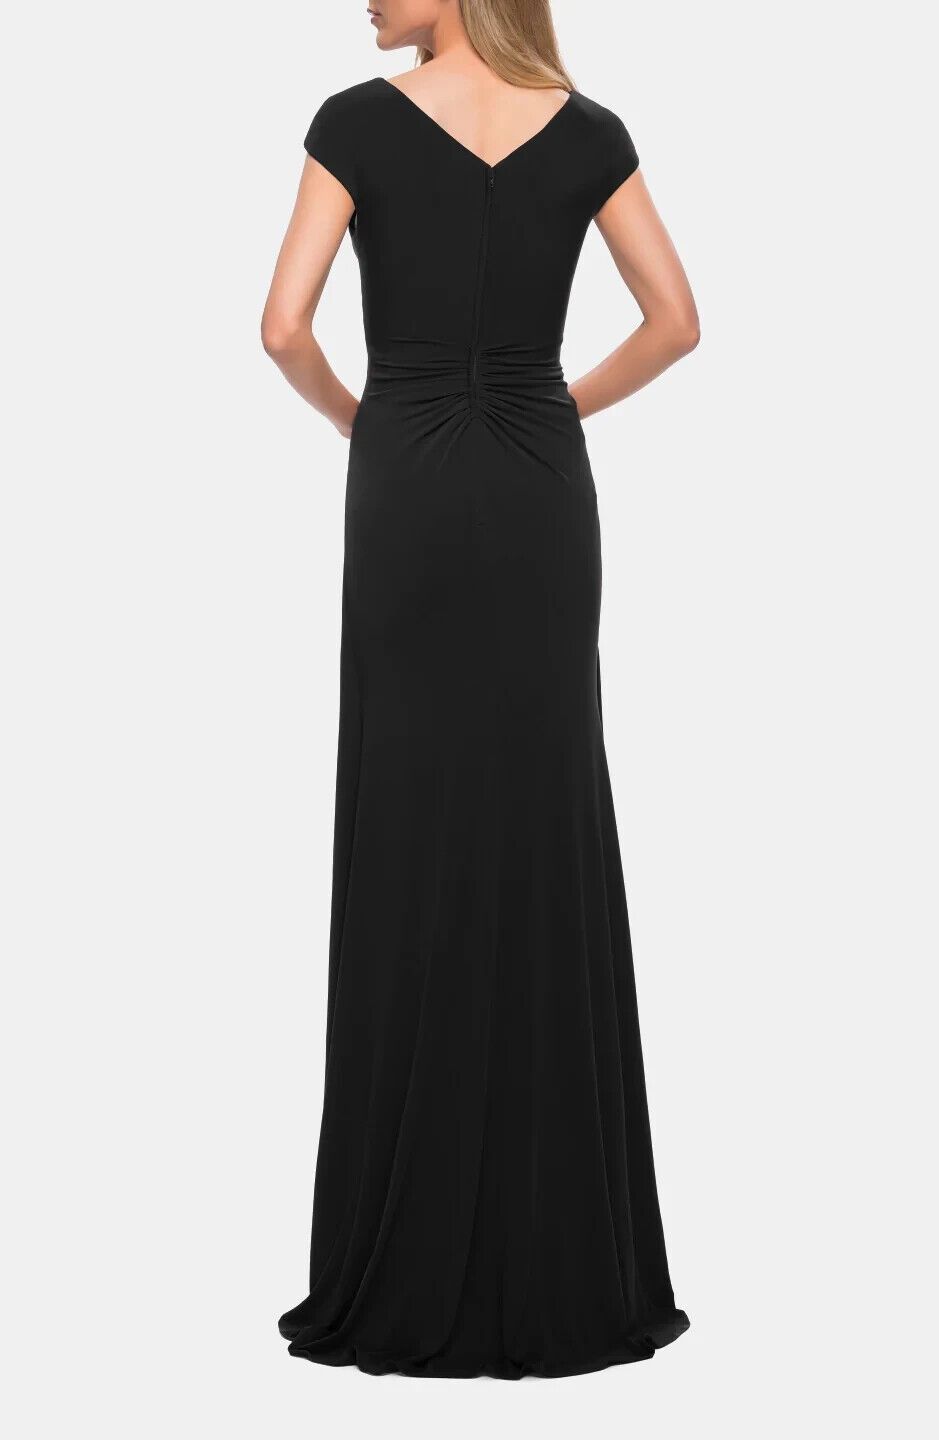 La Femme Size 10 Prom Off The Shoulder Black A-line Dress on Queenly